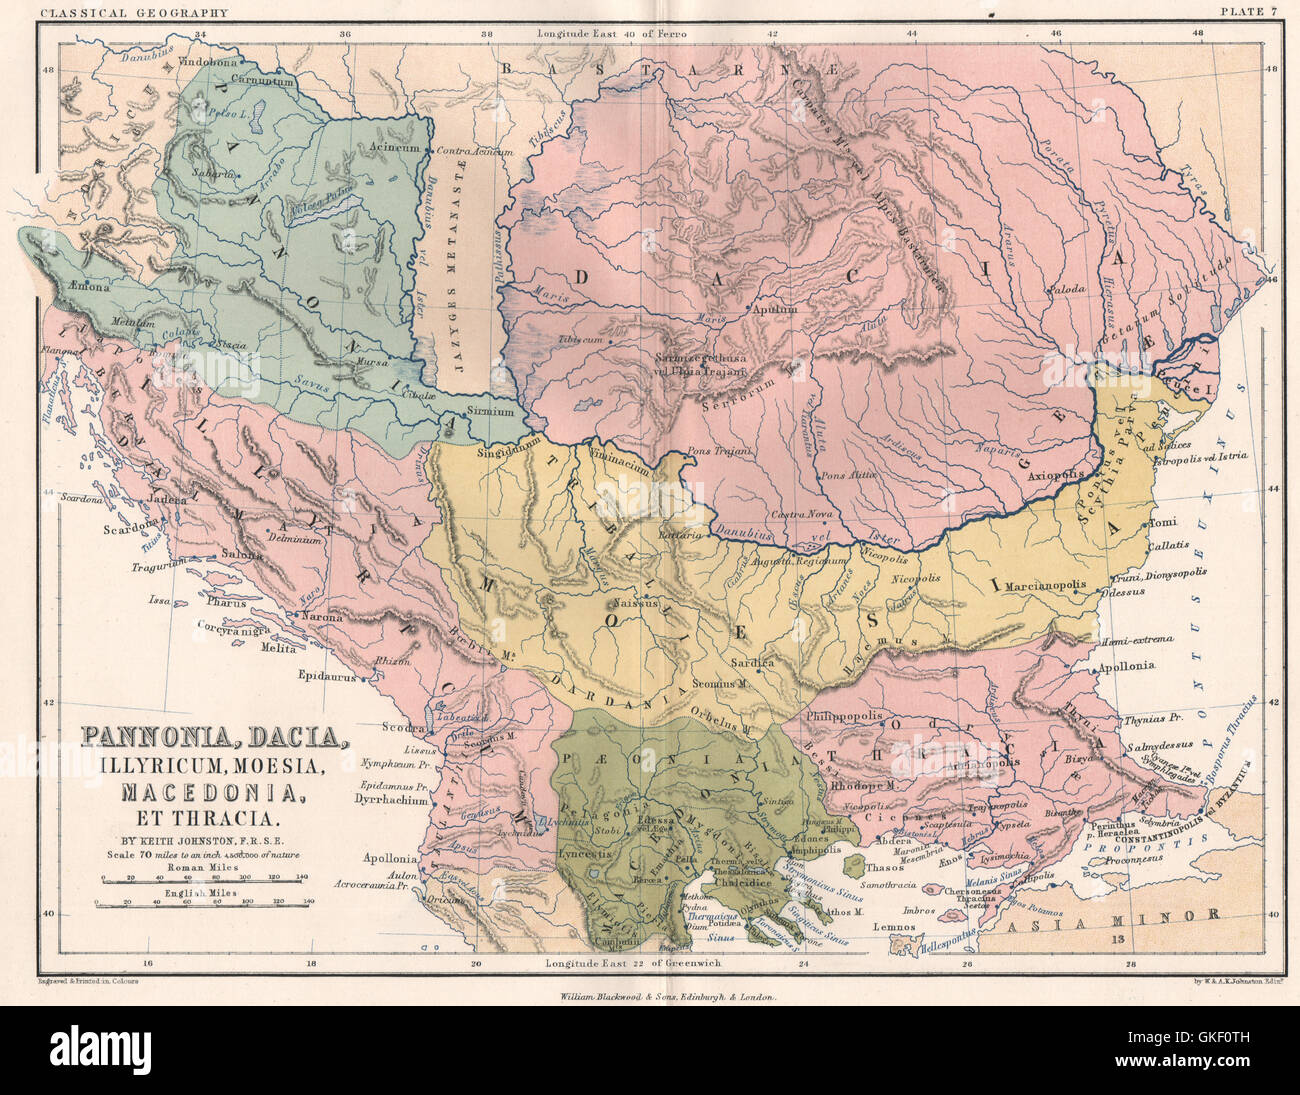 Pannonia, Dacia, Illyricum, Moesia, Macedonia Thracia. Ancient Balkans, 1855 map Stock Photo